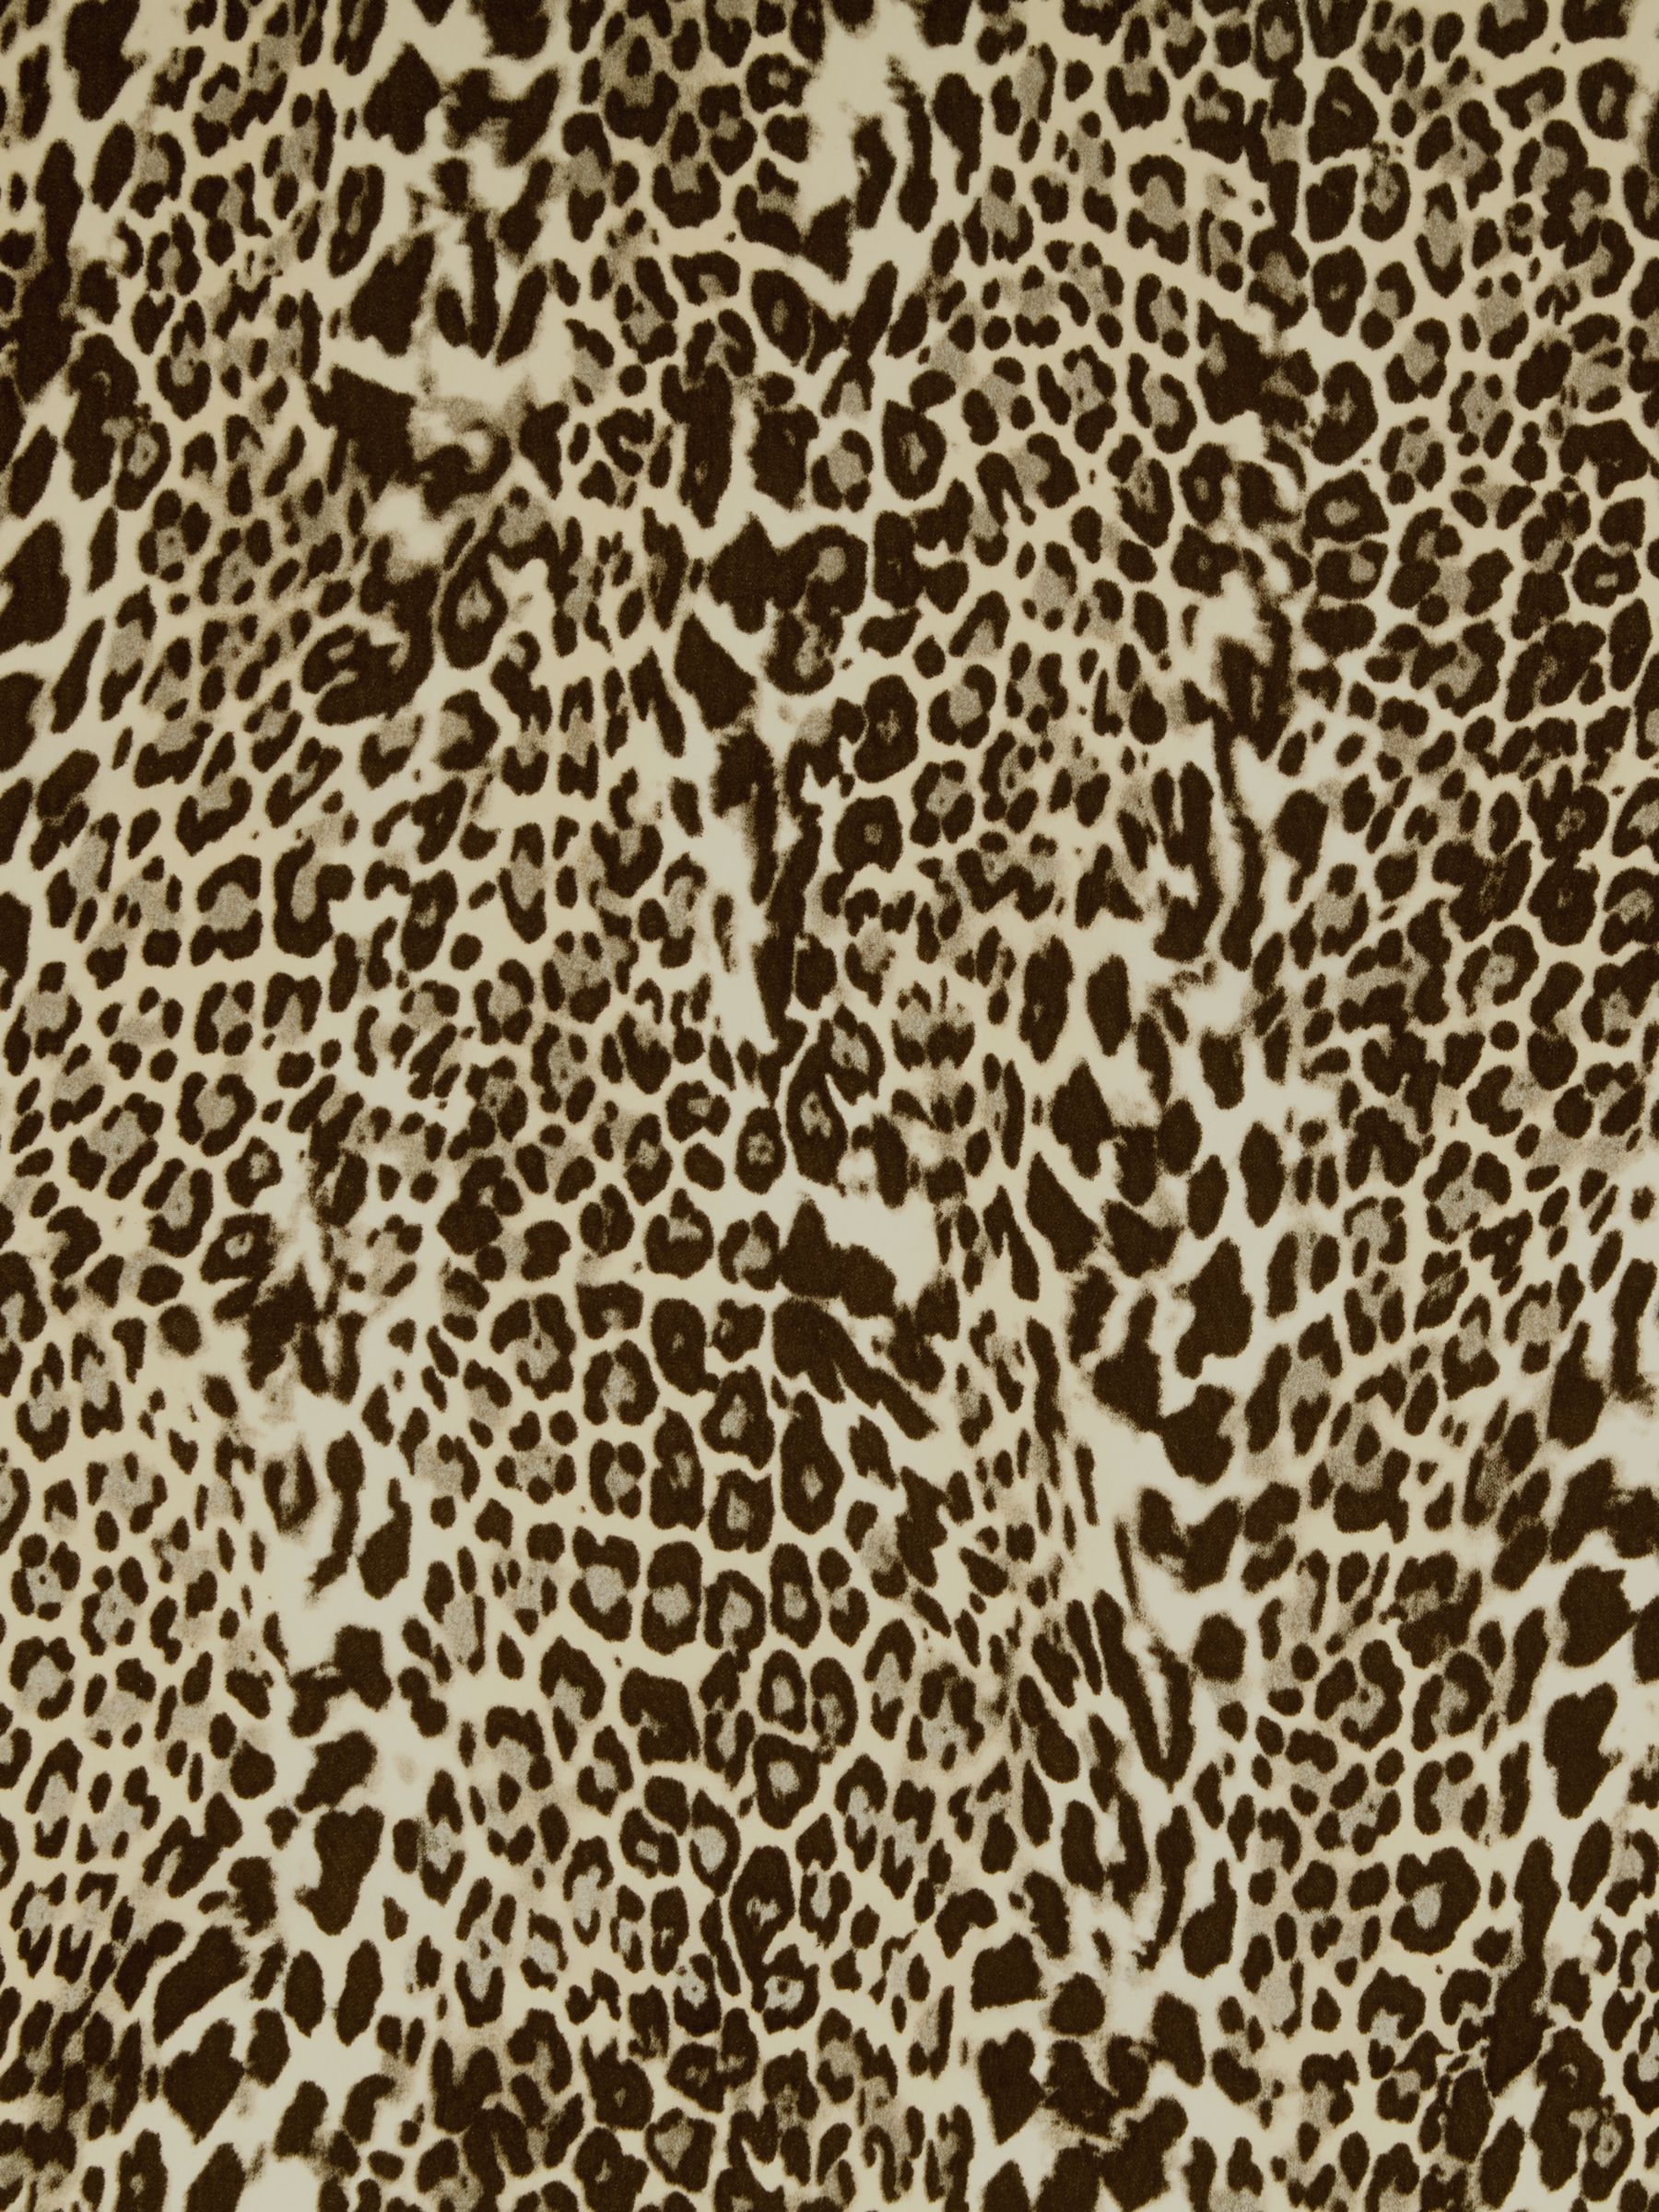 Spendlove Leopard Print Chiffon Fabric, Brown at John Lewis & Partners